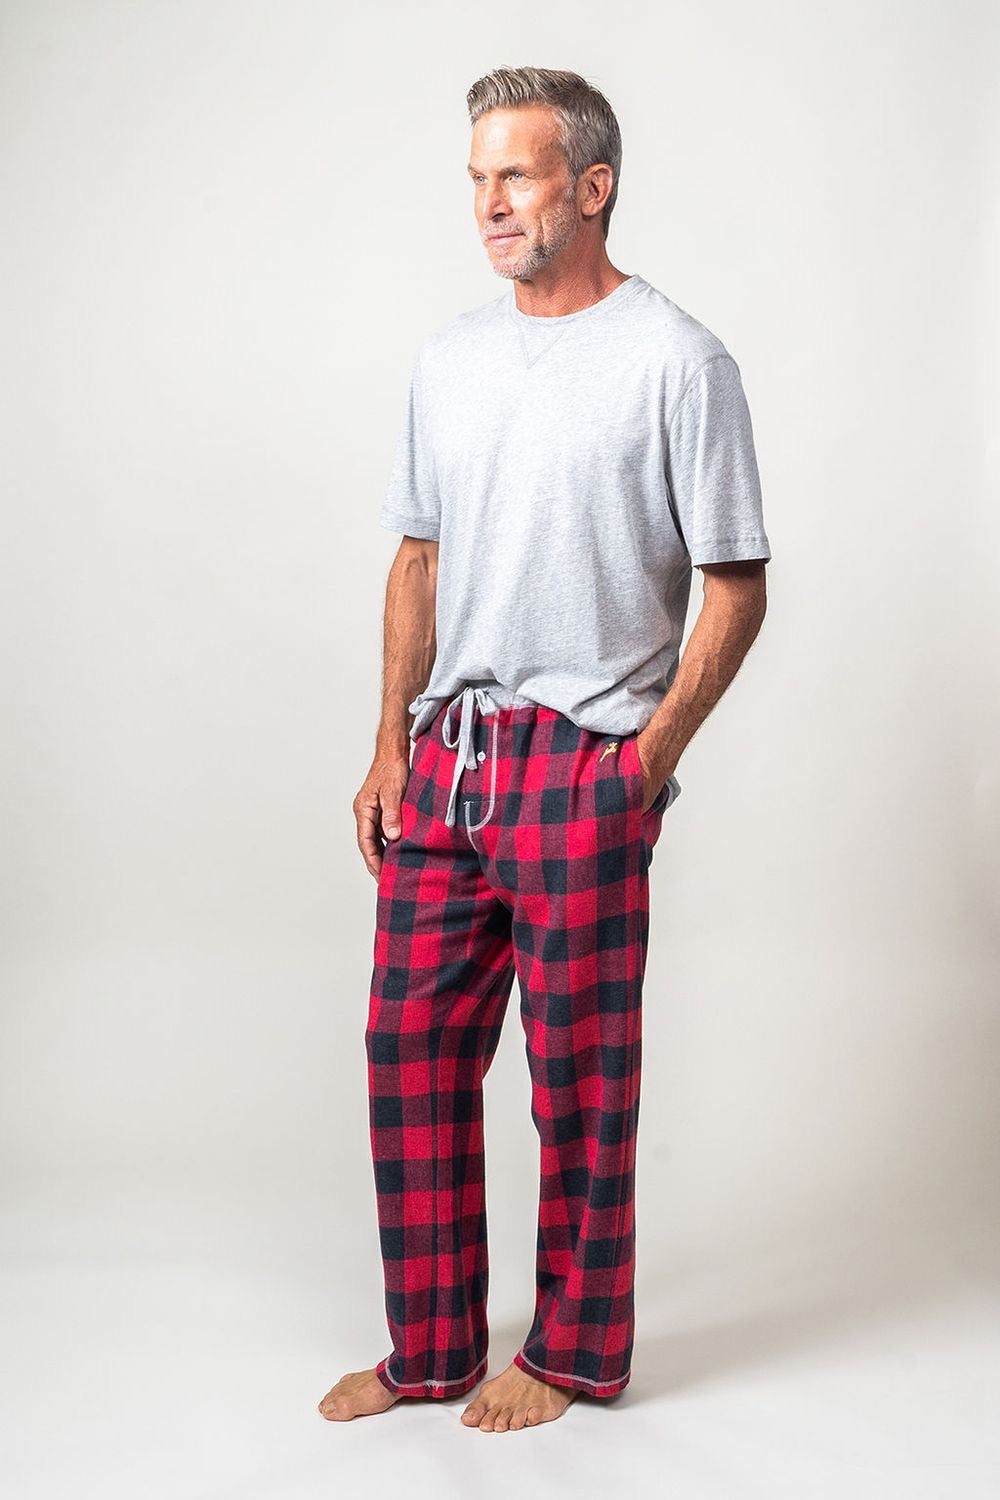 Mens Red Flannel Pajama Pants Sale | bellvalefarms.com